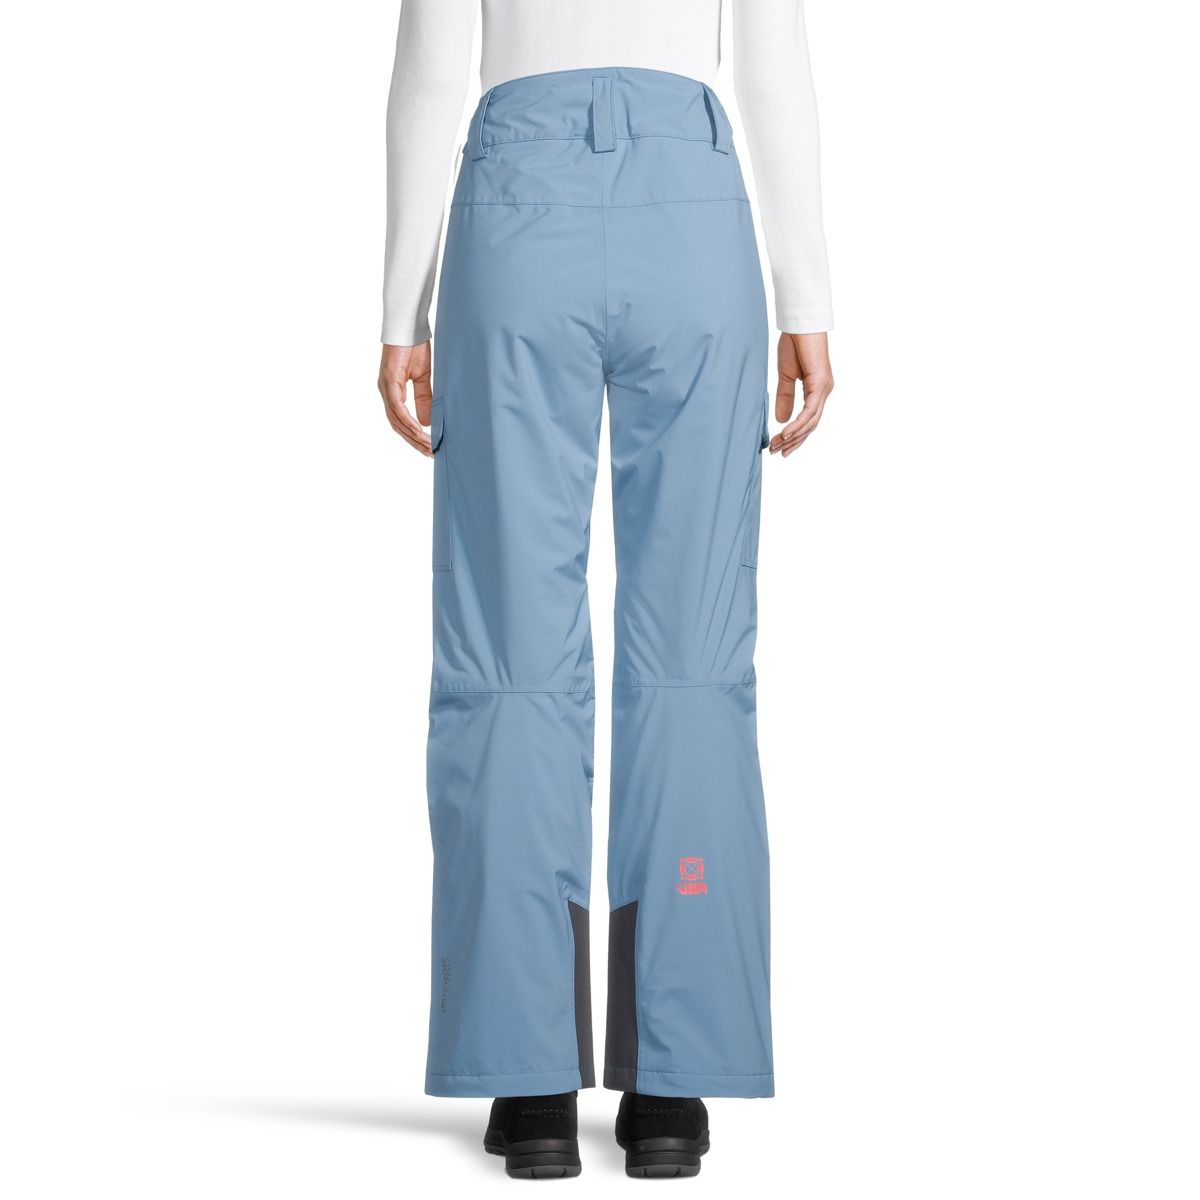 Helly Hansen Women's Switch Cargo Snow Pants, Insulated, Ski, Winter,  Waterproof